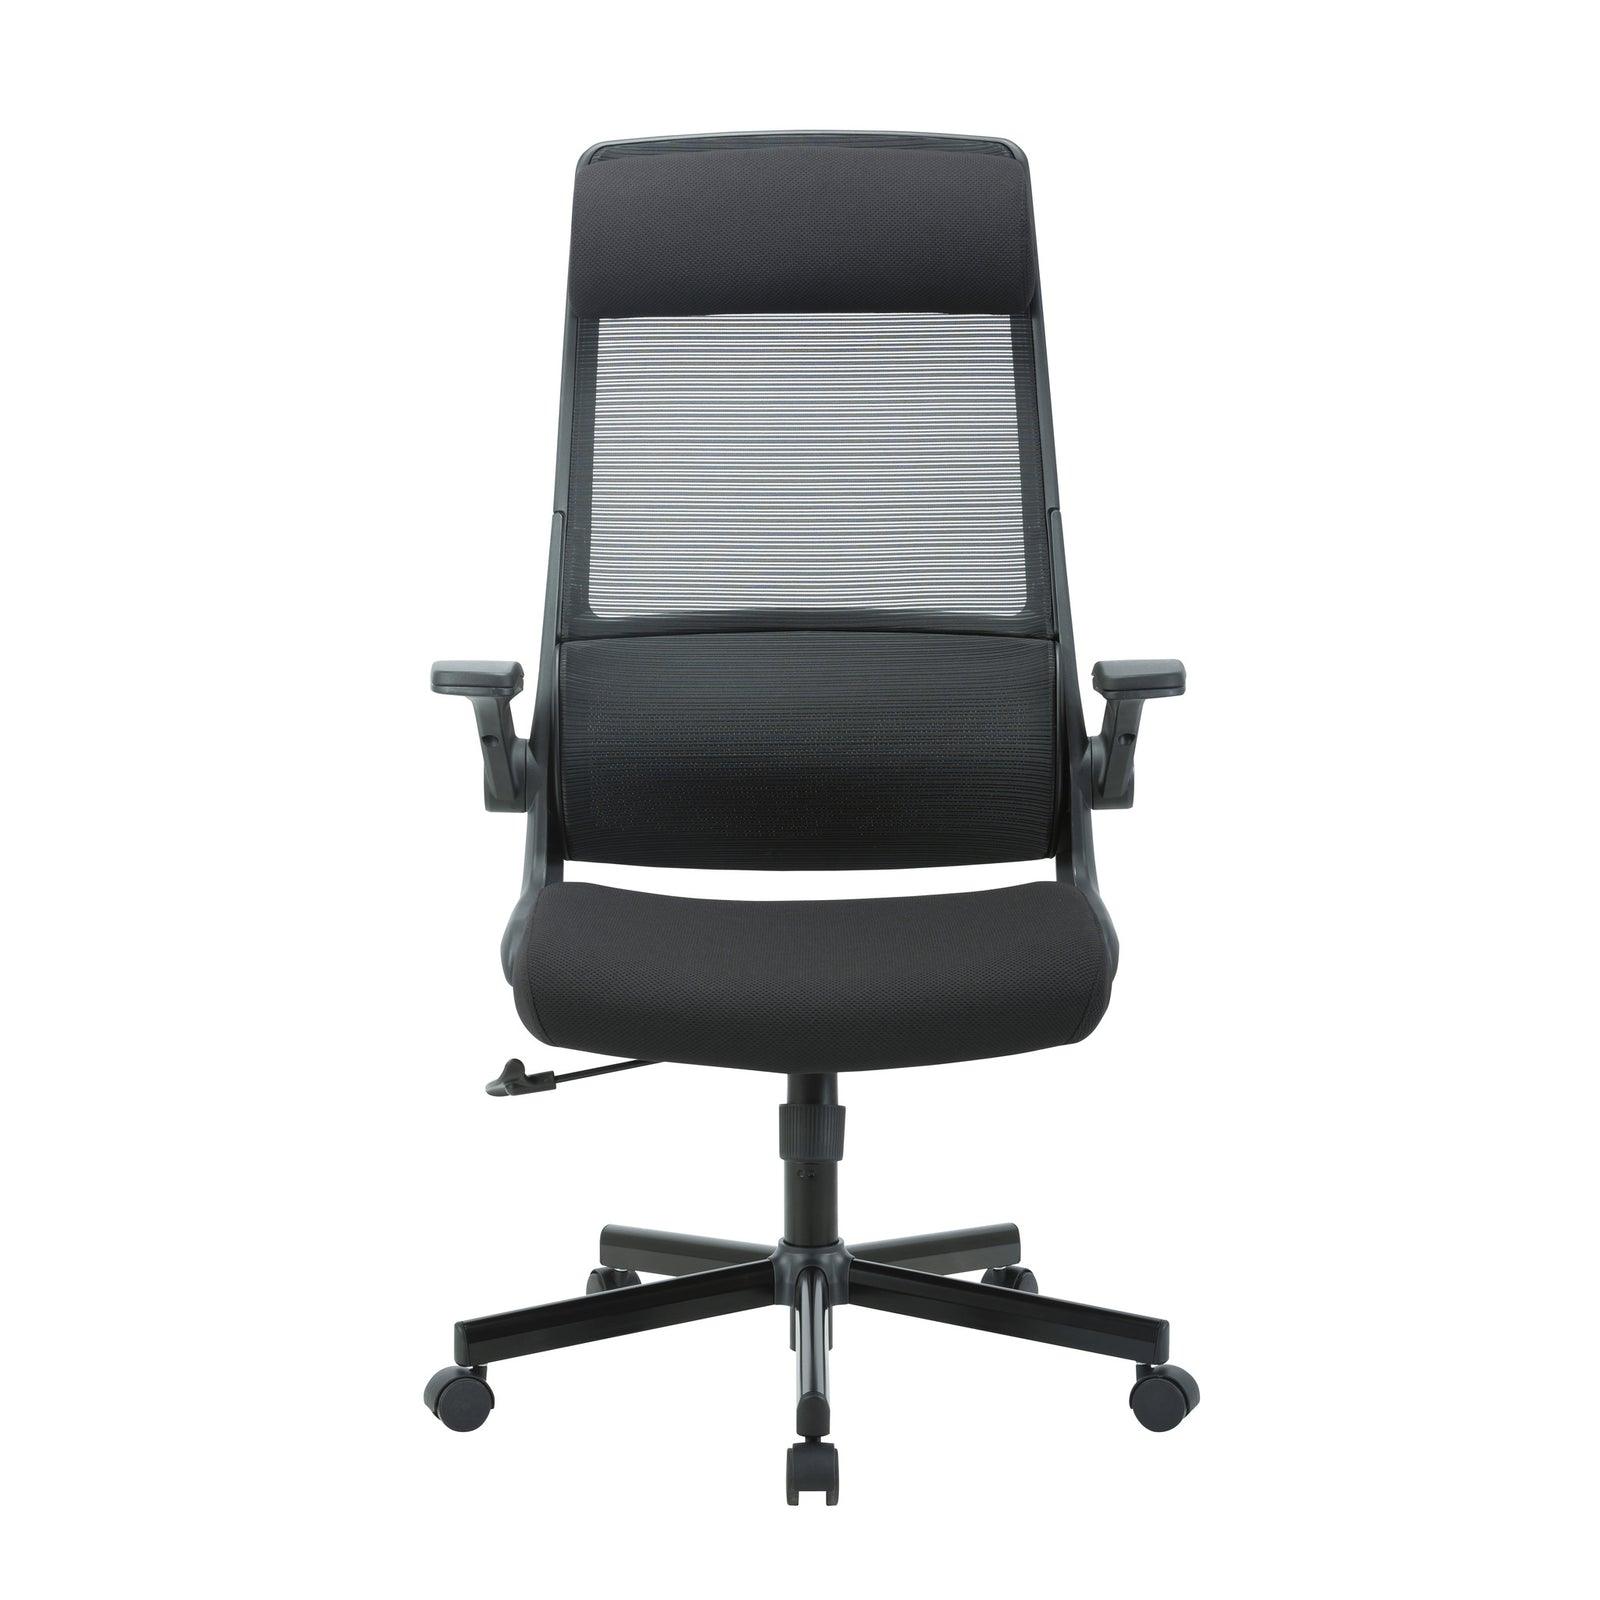 Mesh Ergonomic Office Chair - Black - Office/Gaming ChairsOC8251-UN 5